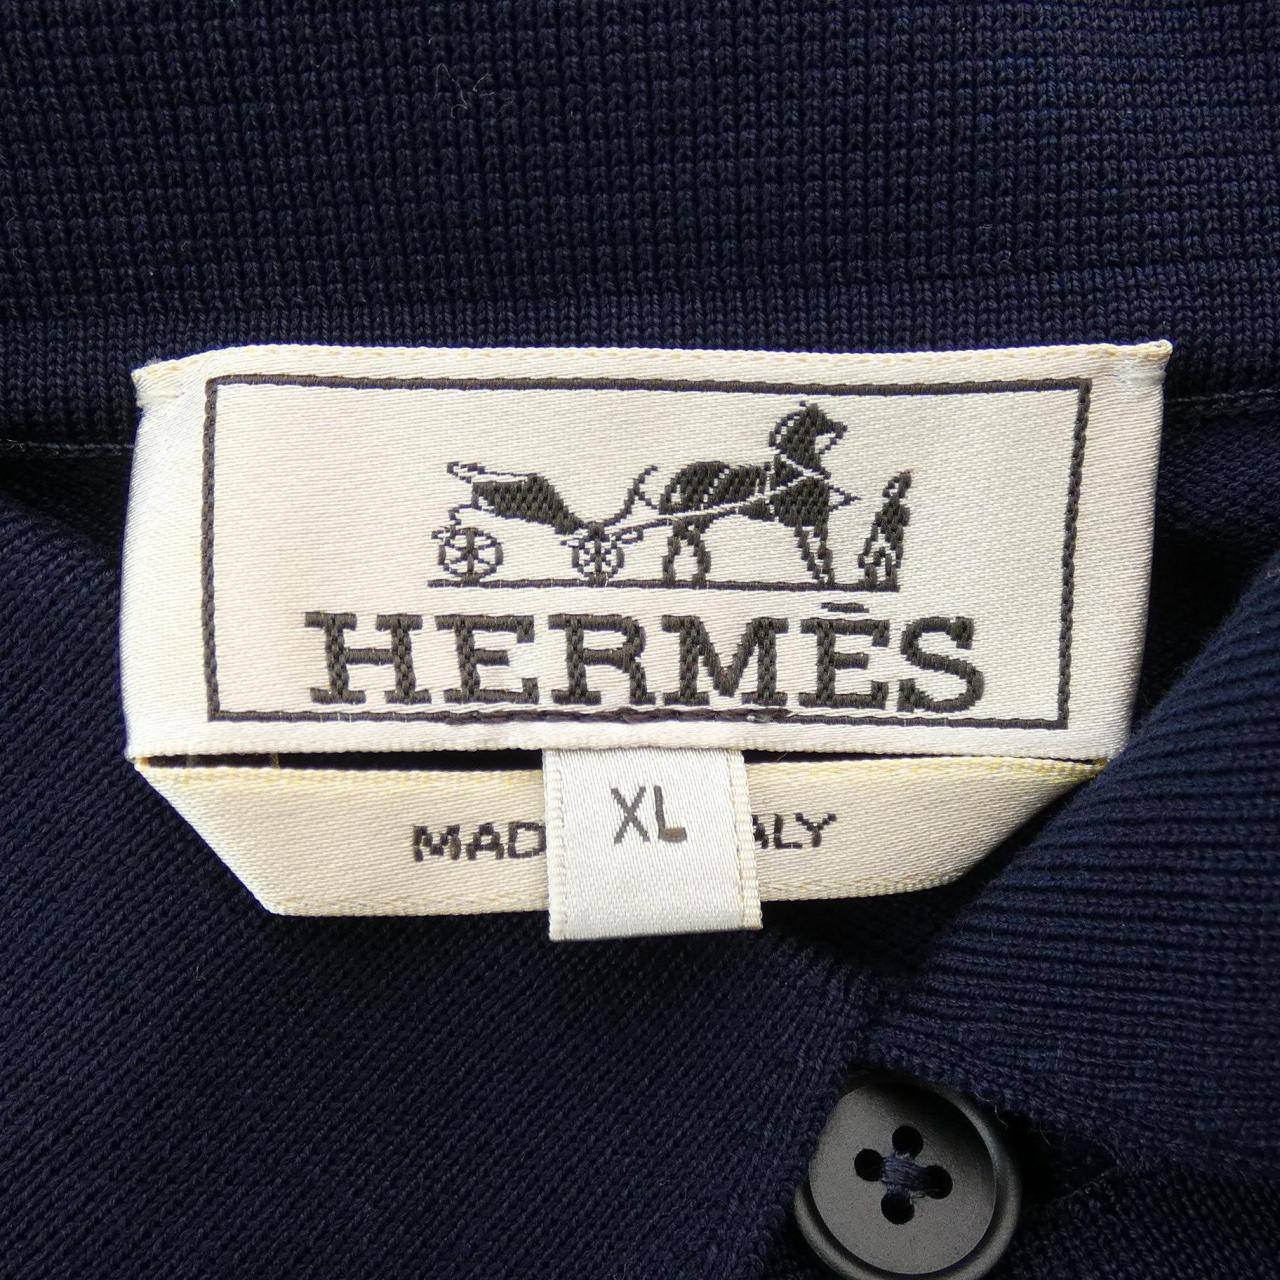 HERMES HERMES Polo Shirt